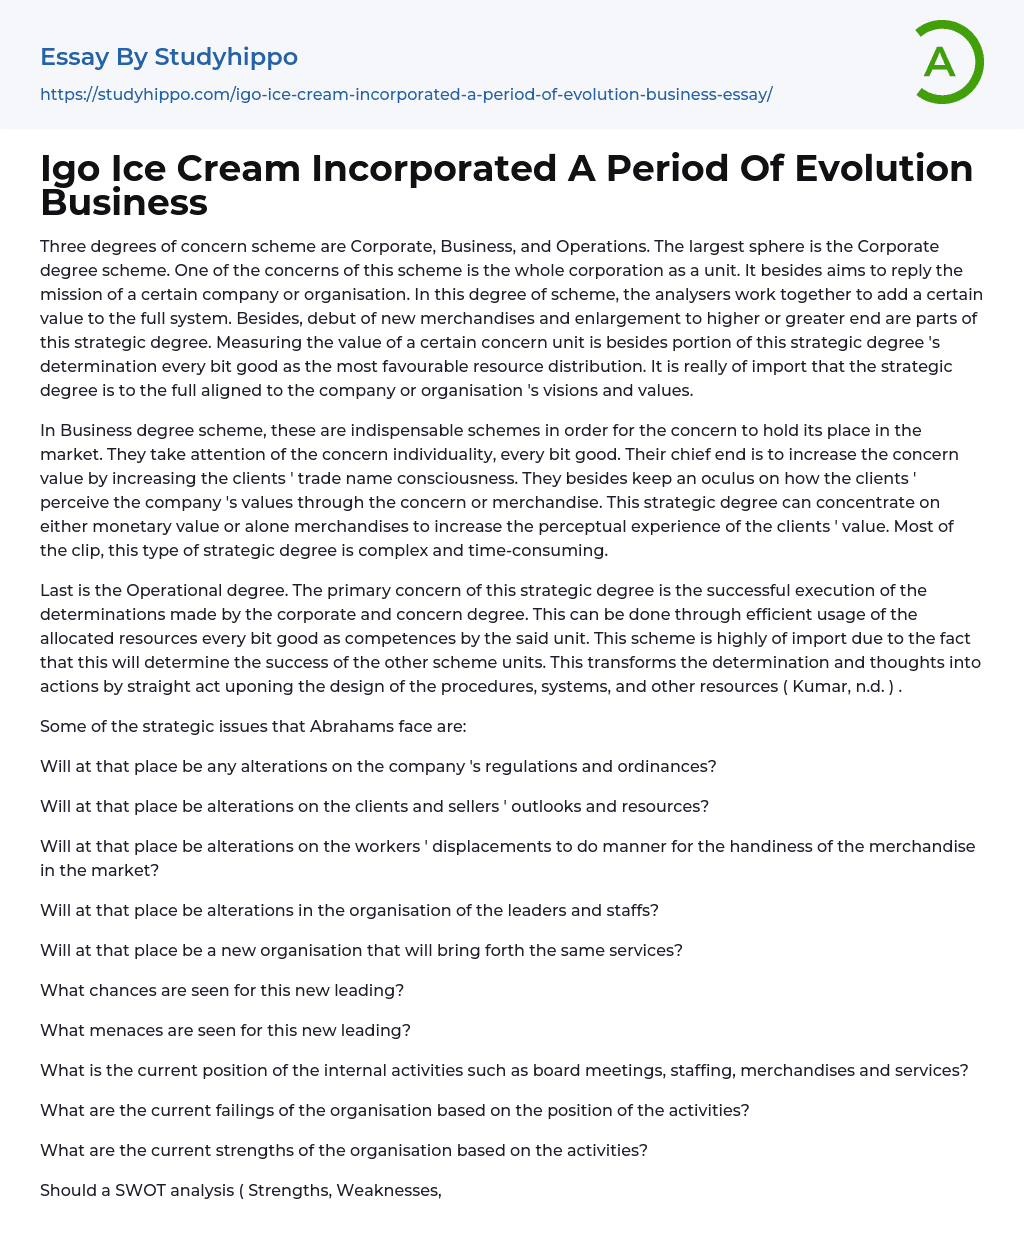 Igo Ice Cream Incorporated A Period Of Evolution Business Essay Example